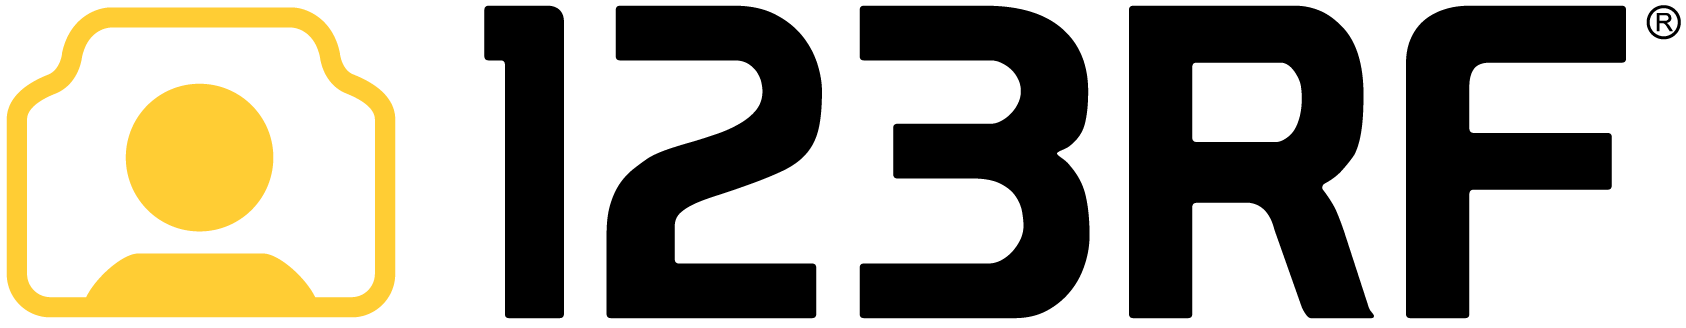 128-123rf-logo.png